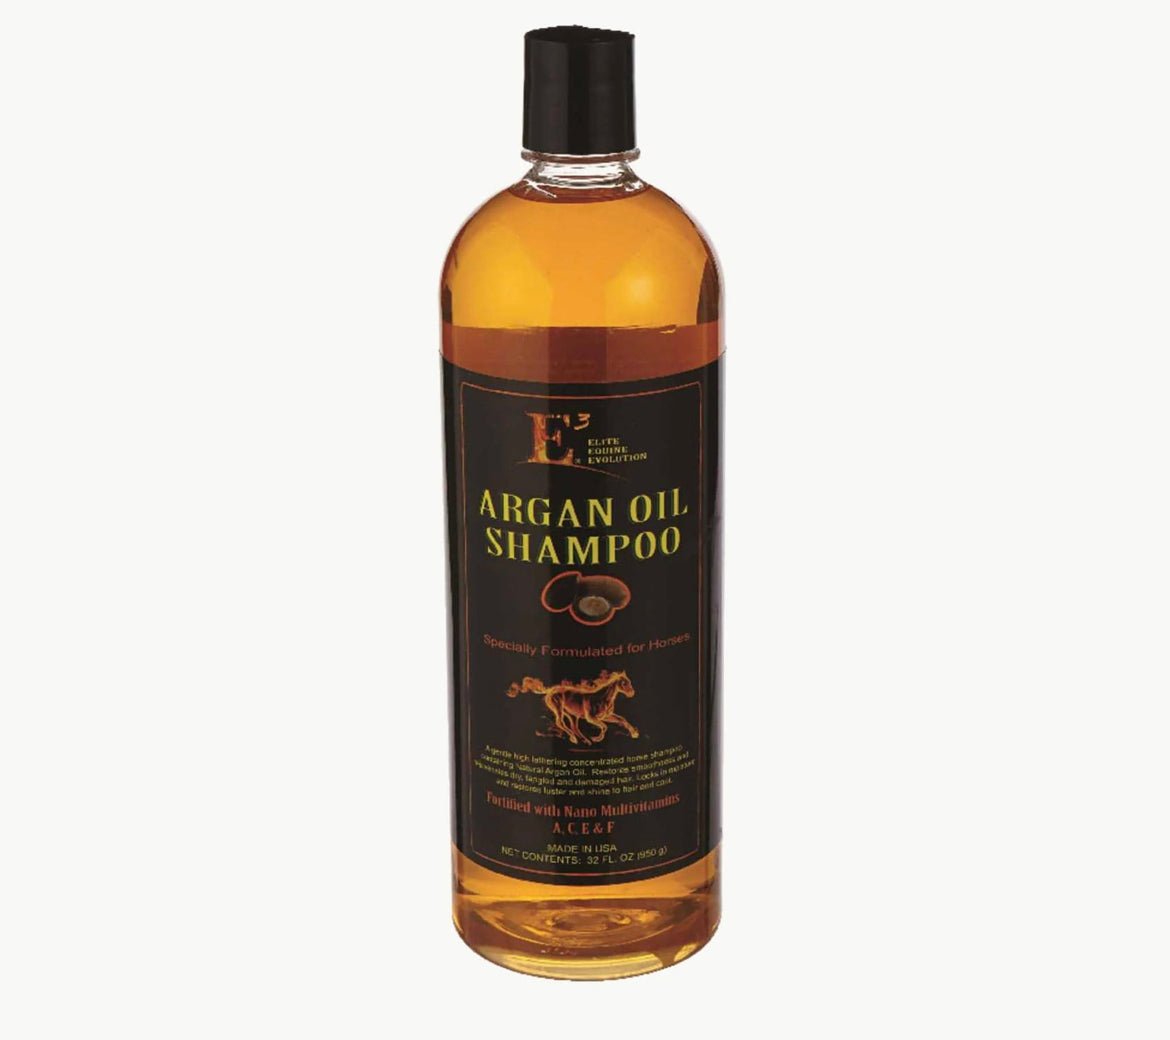 E3 Argan oil shampoo